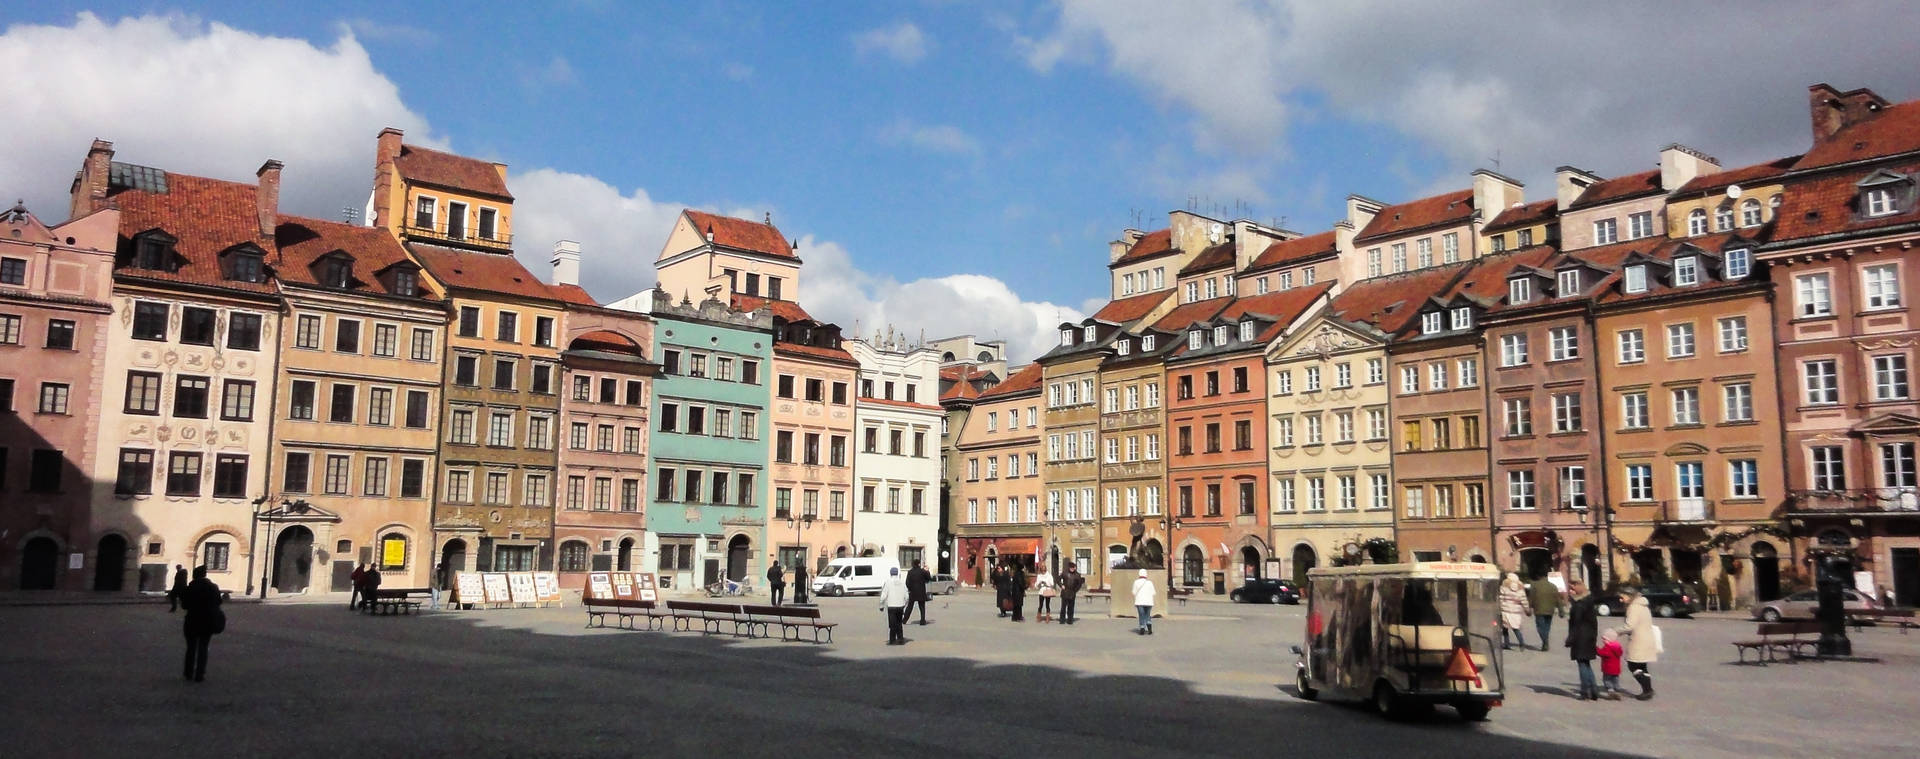 Poland Warsaw Old Town